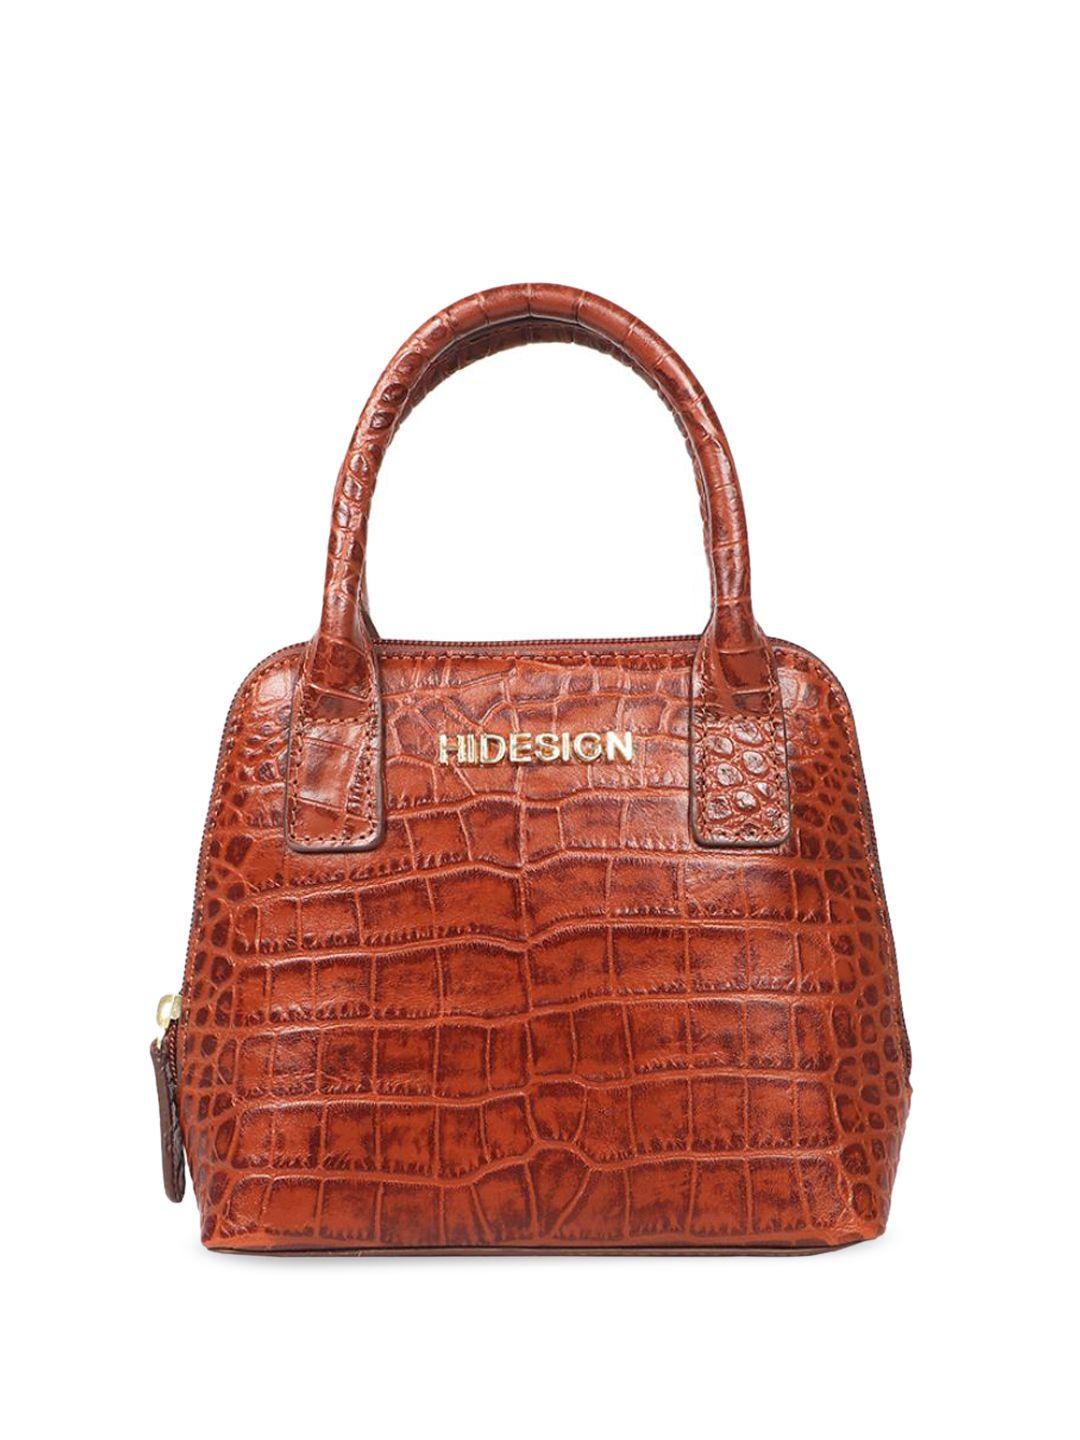 hidesign textured leather structured satchel bag